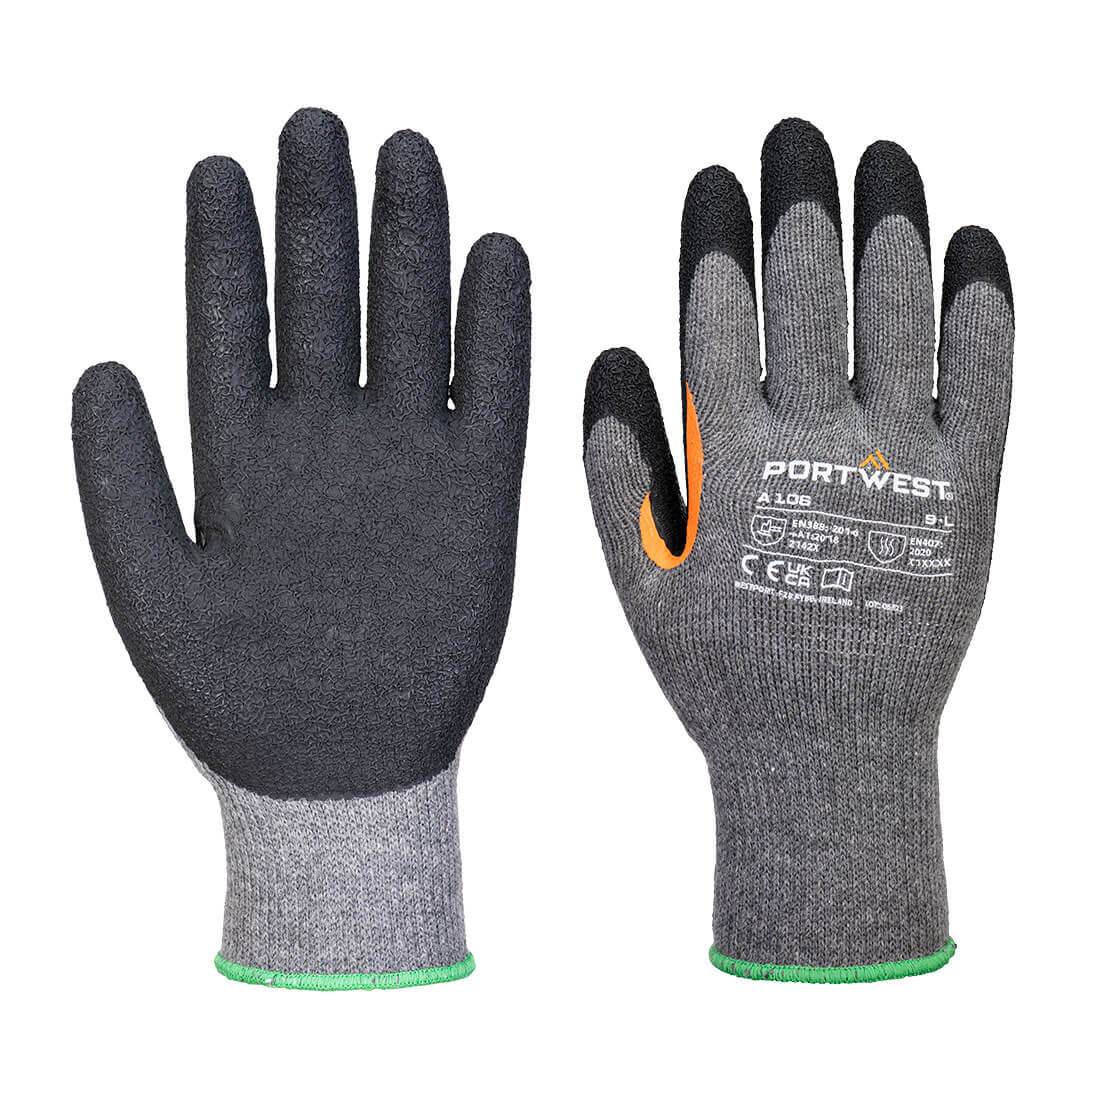 A106 - Grip 10 Latex Reinforced Thumb Glove (Pk12) - Grey/Black